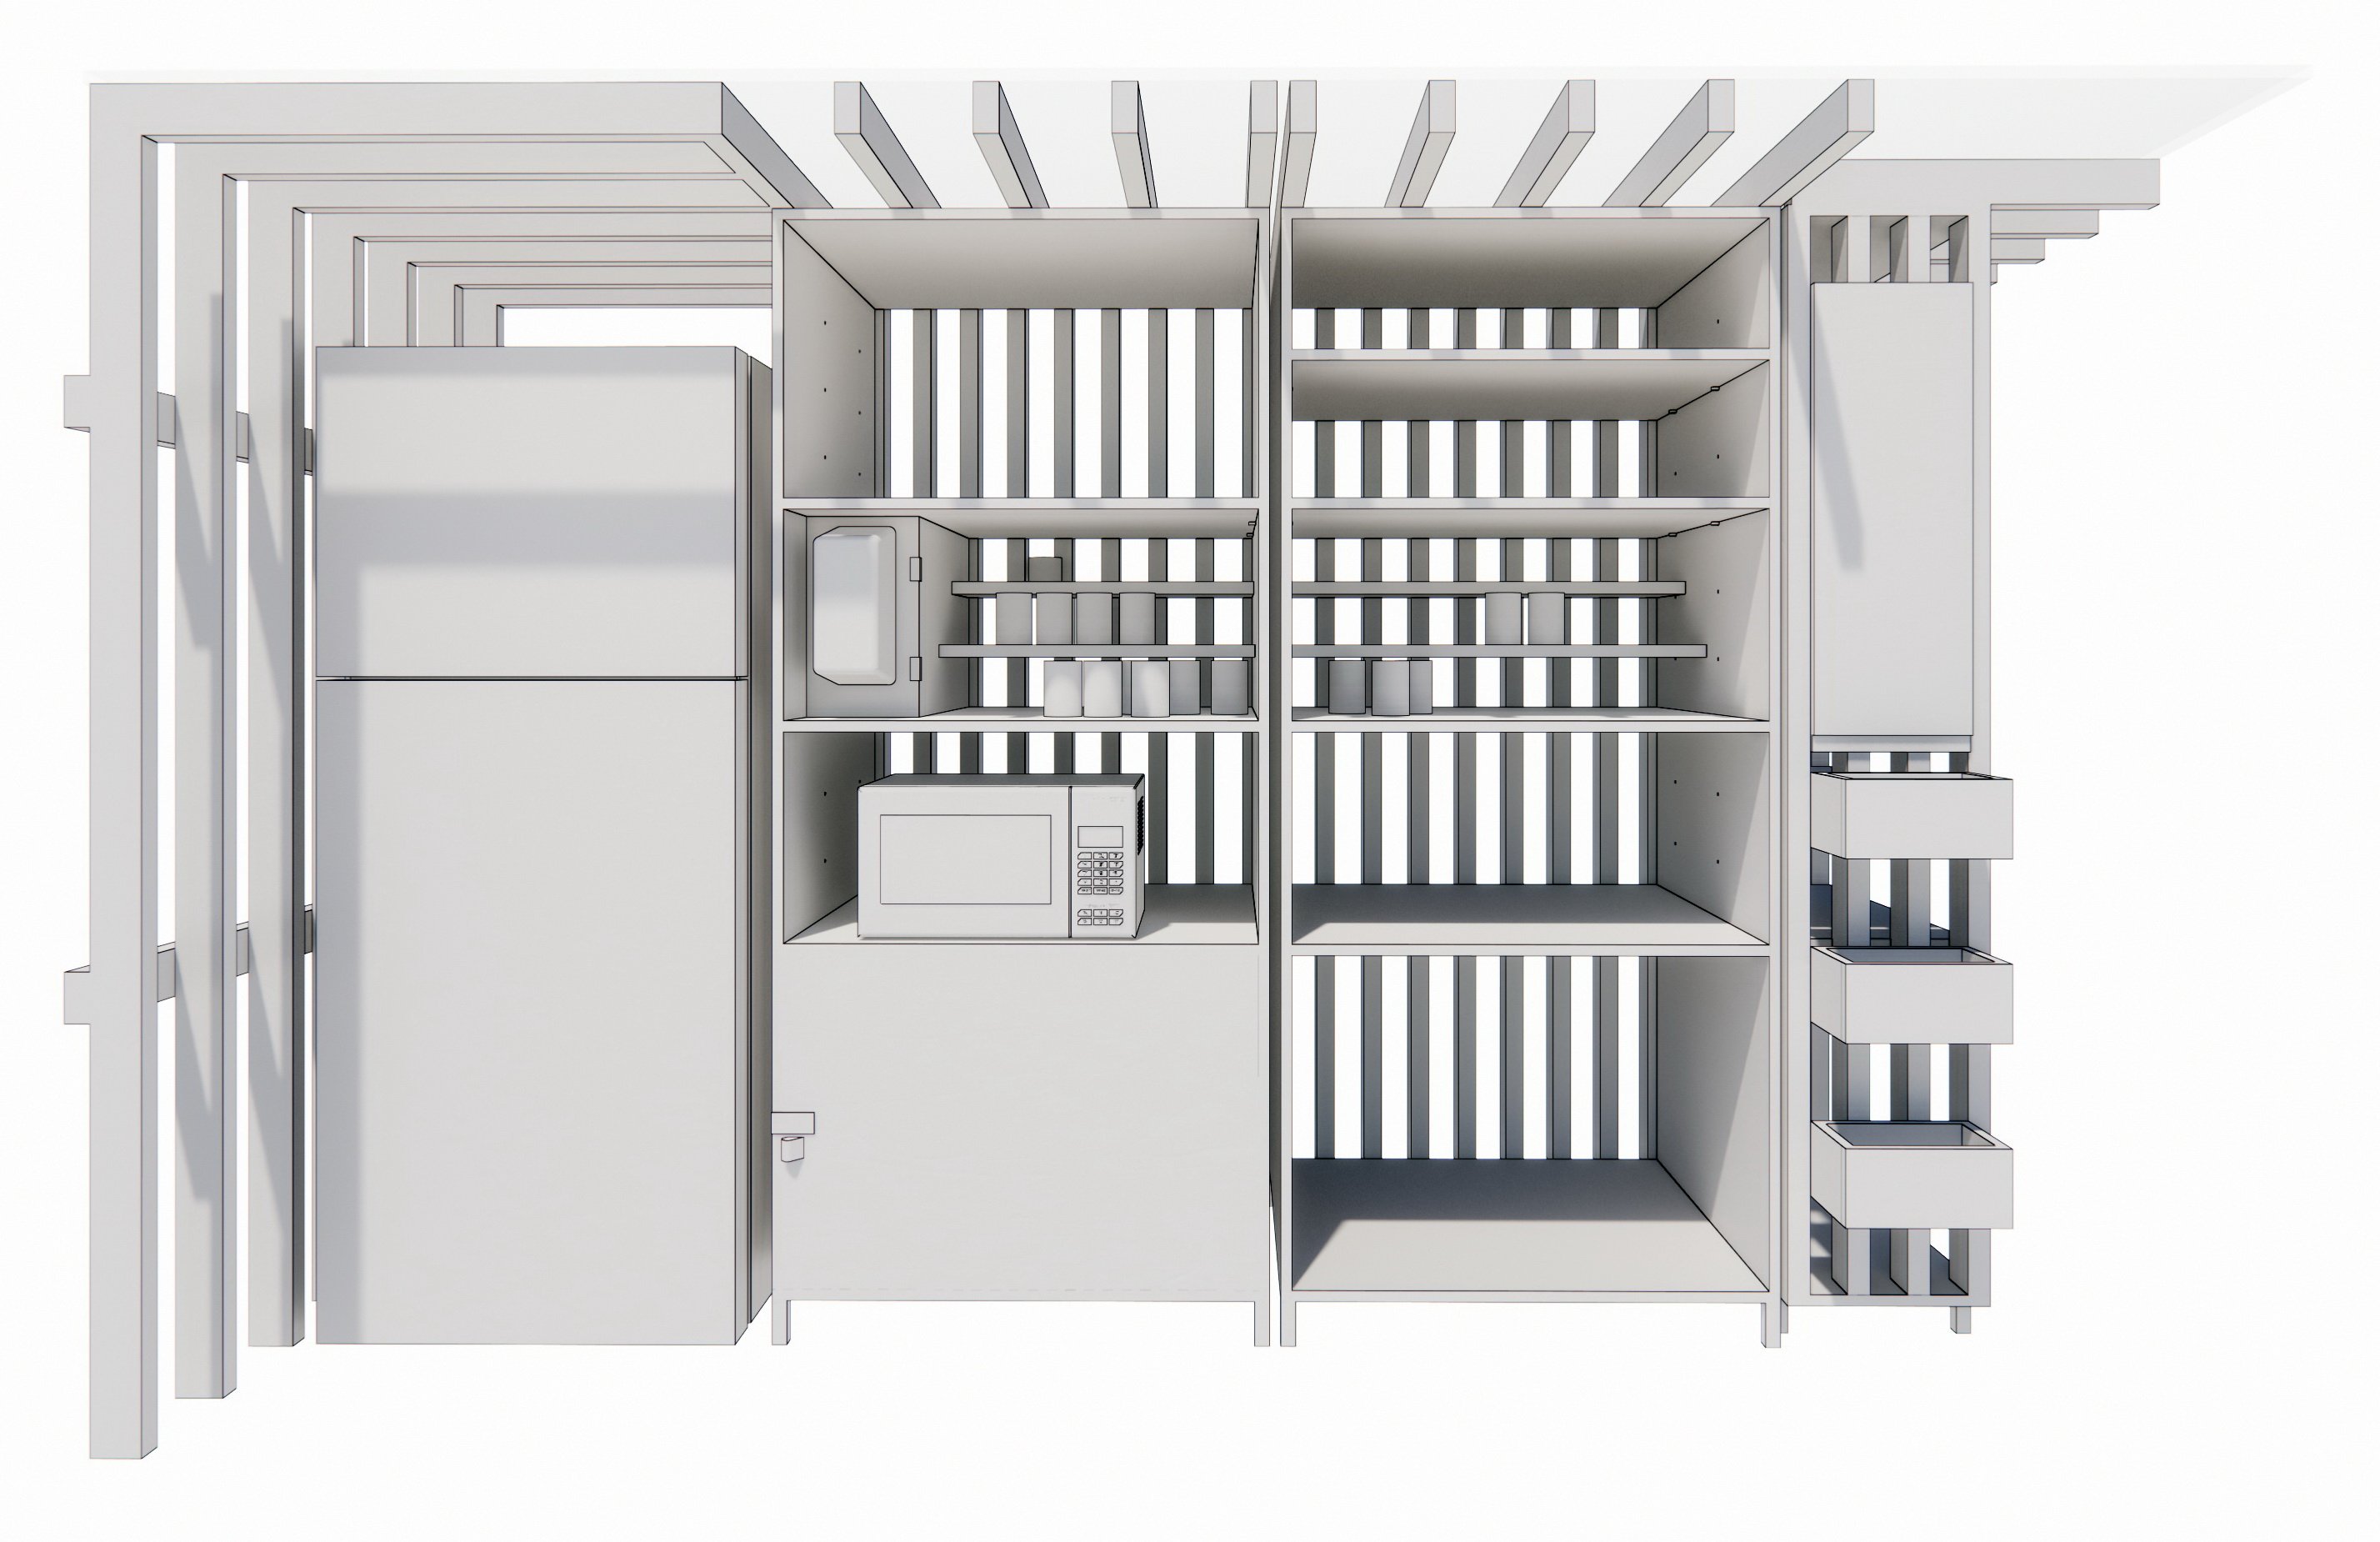 Drawing of modular community fridge structure